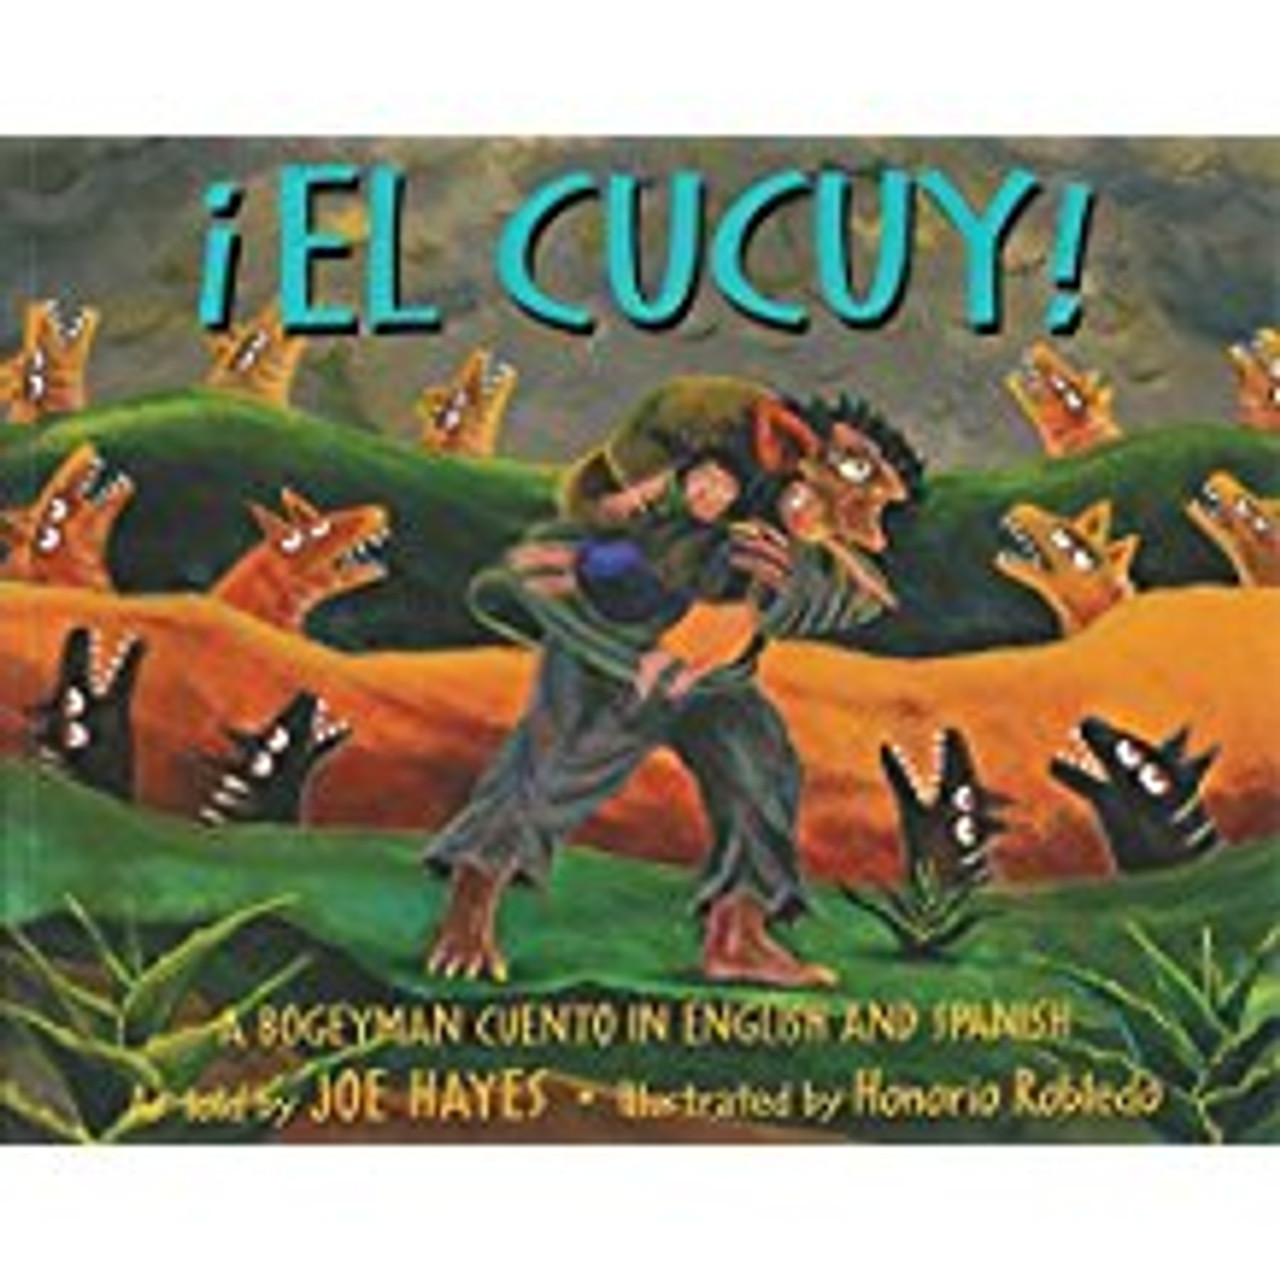 El Cucuy!: A Bogeyman Cuento In English And Spanish = The Boogeyman by Joe Hayes by Joe Hayes